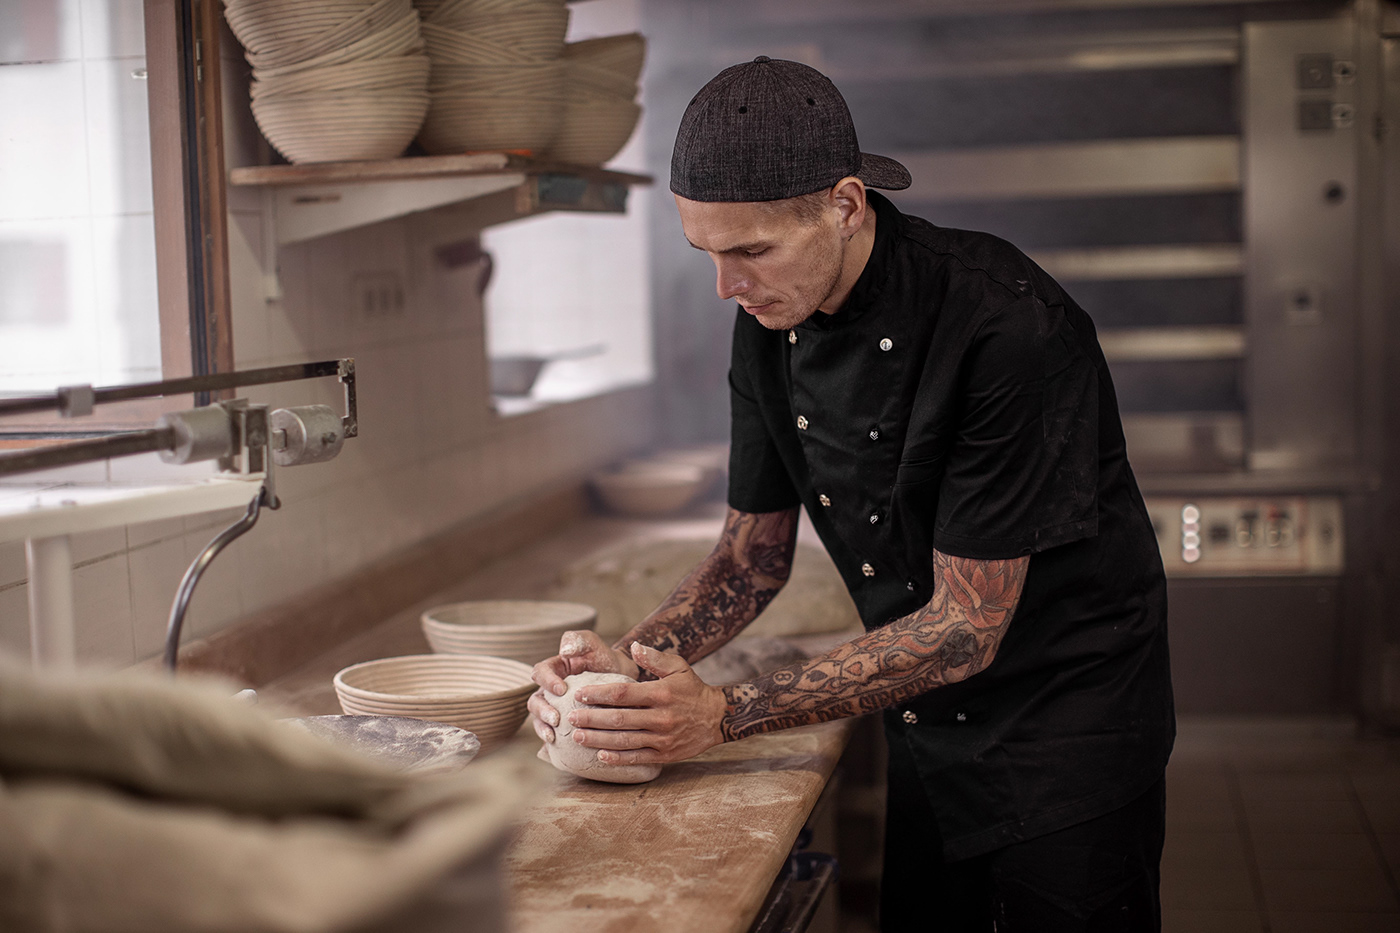 photograf-reportage-munich-handcraft-commercial-bakery-men-work-production-helgeroeske-behance6